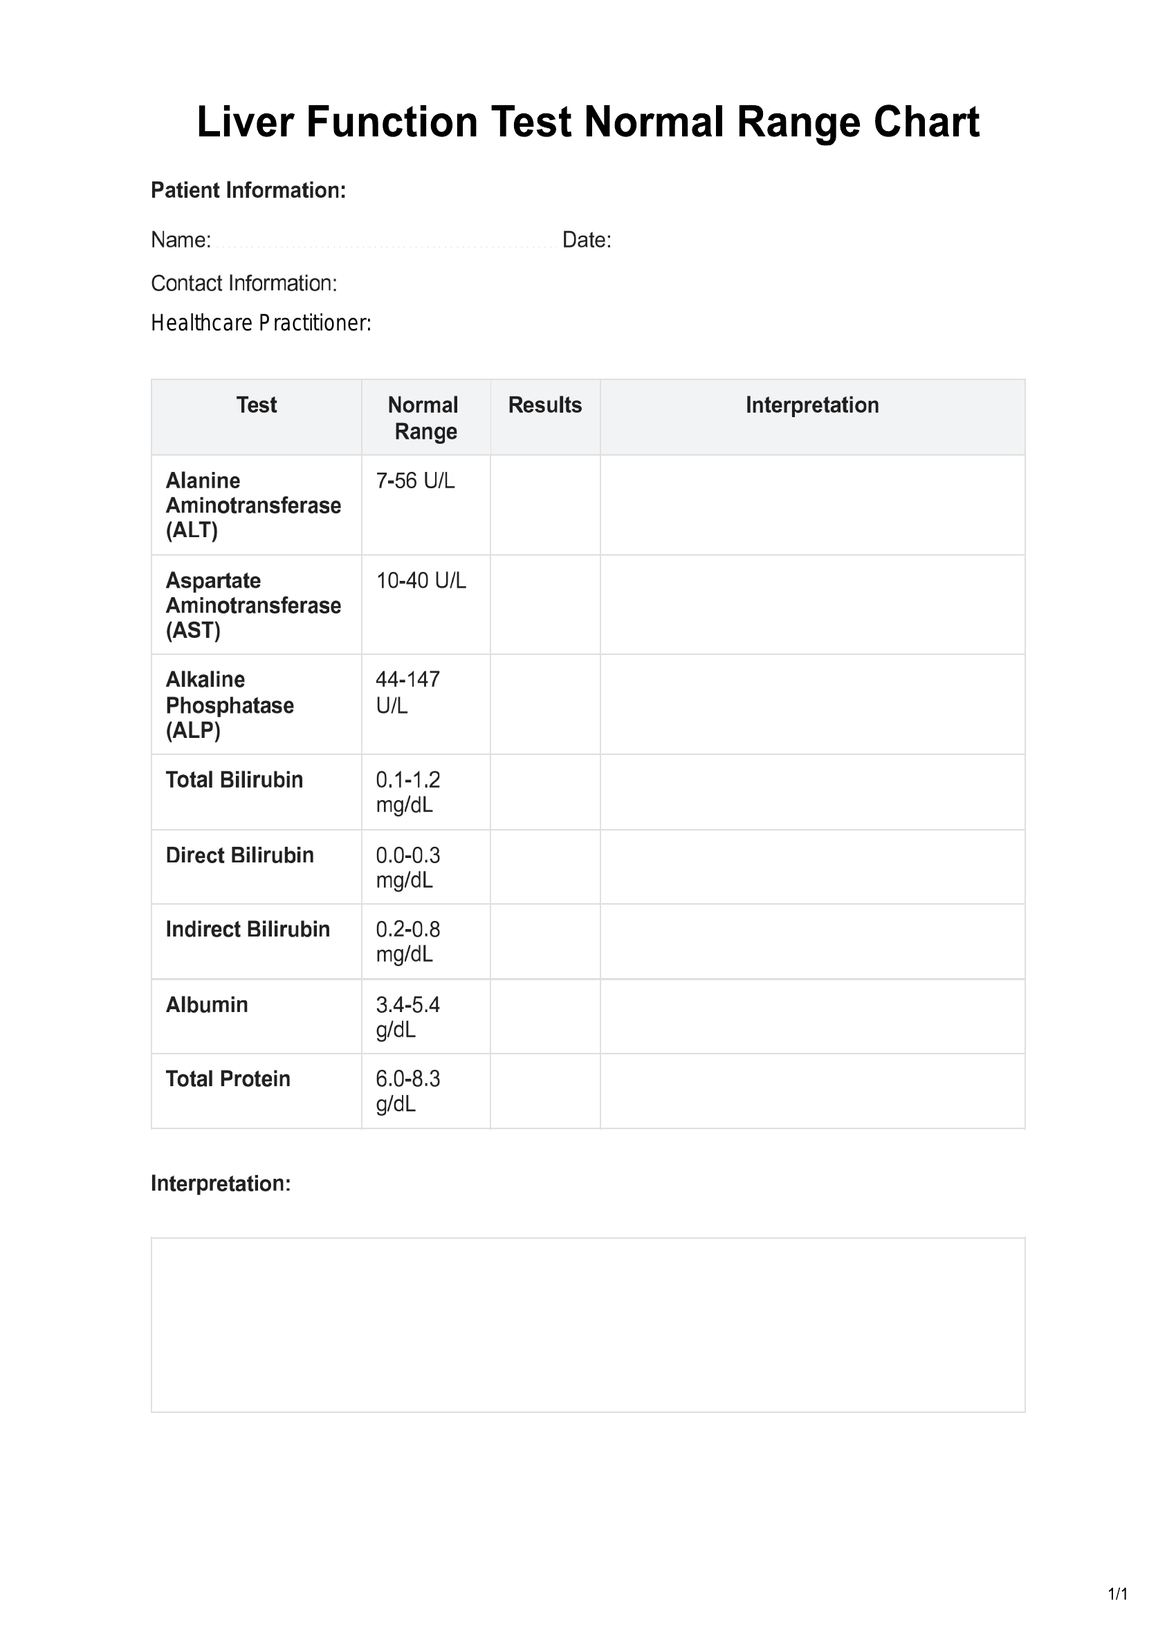 Liver Function Test Normal Range PDF Example